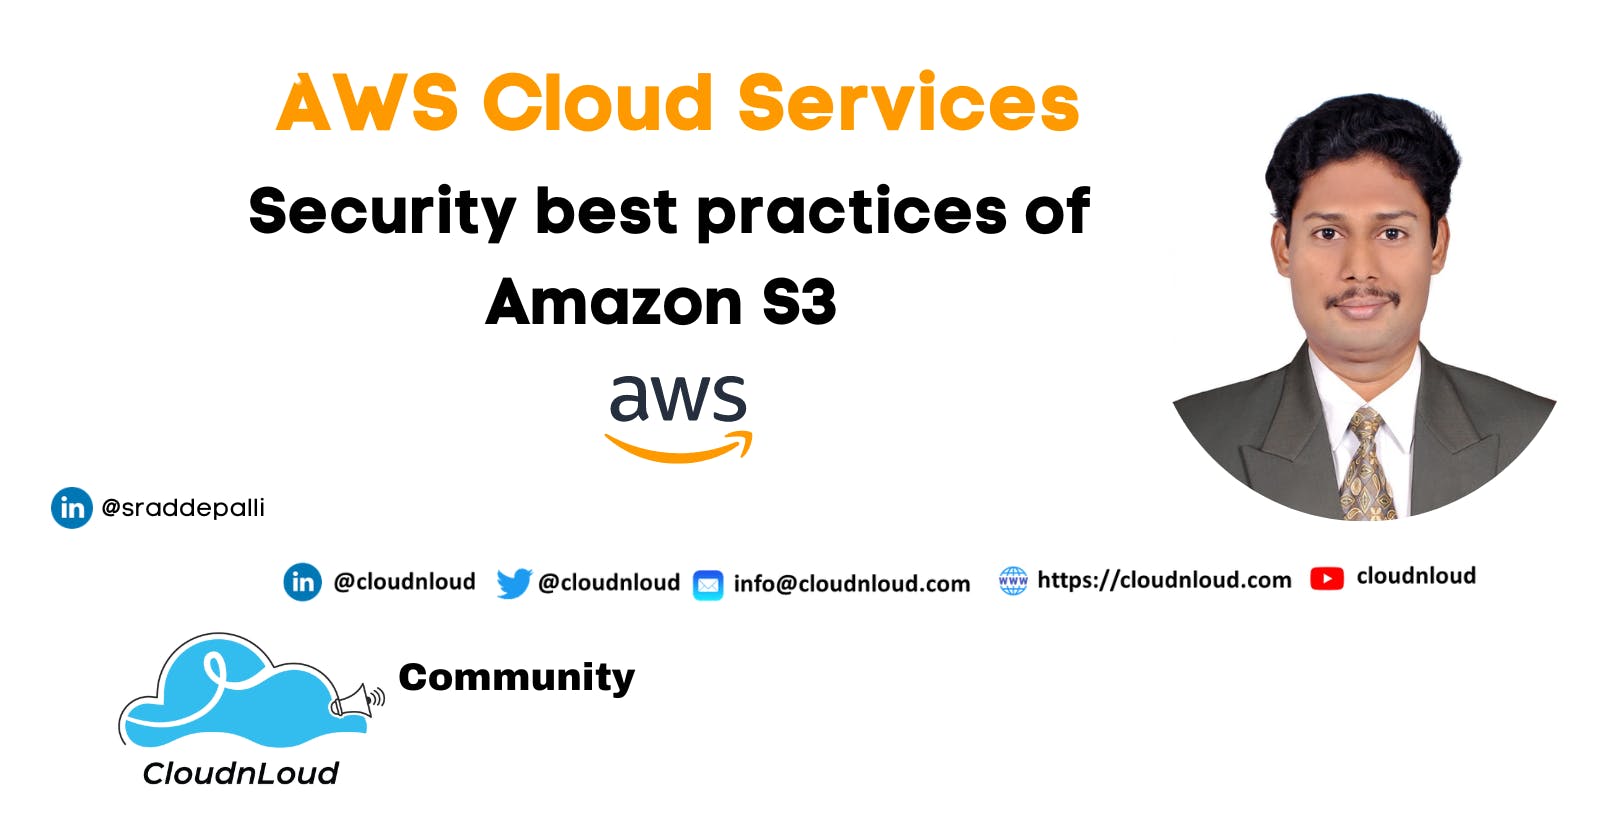 Security best practices of Amazon S3